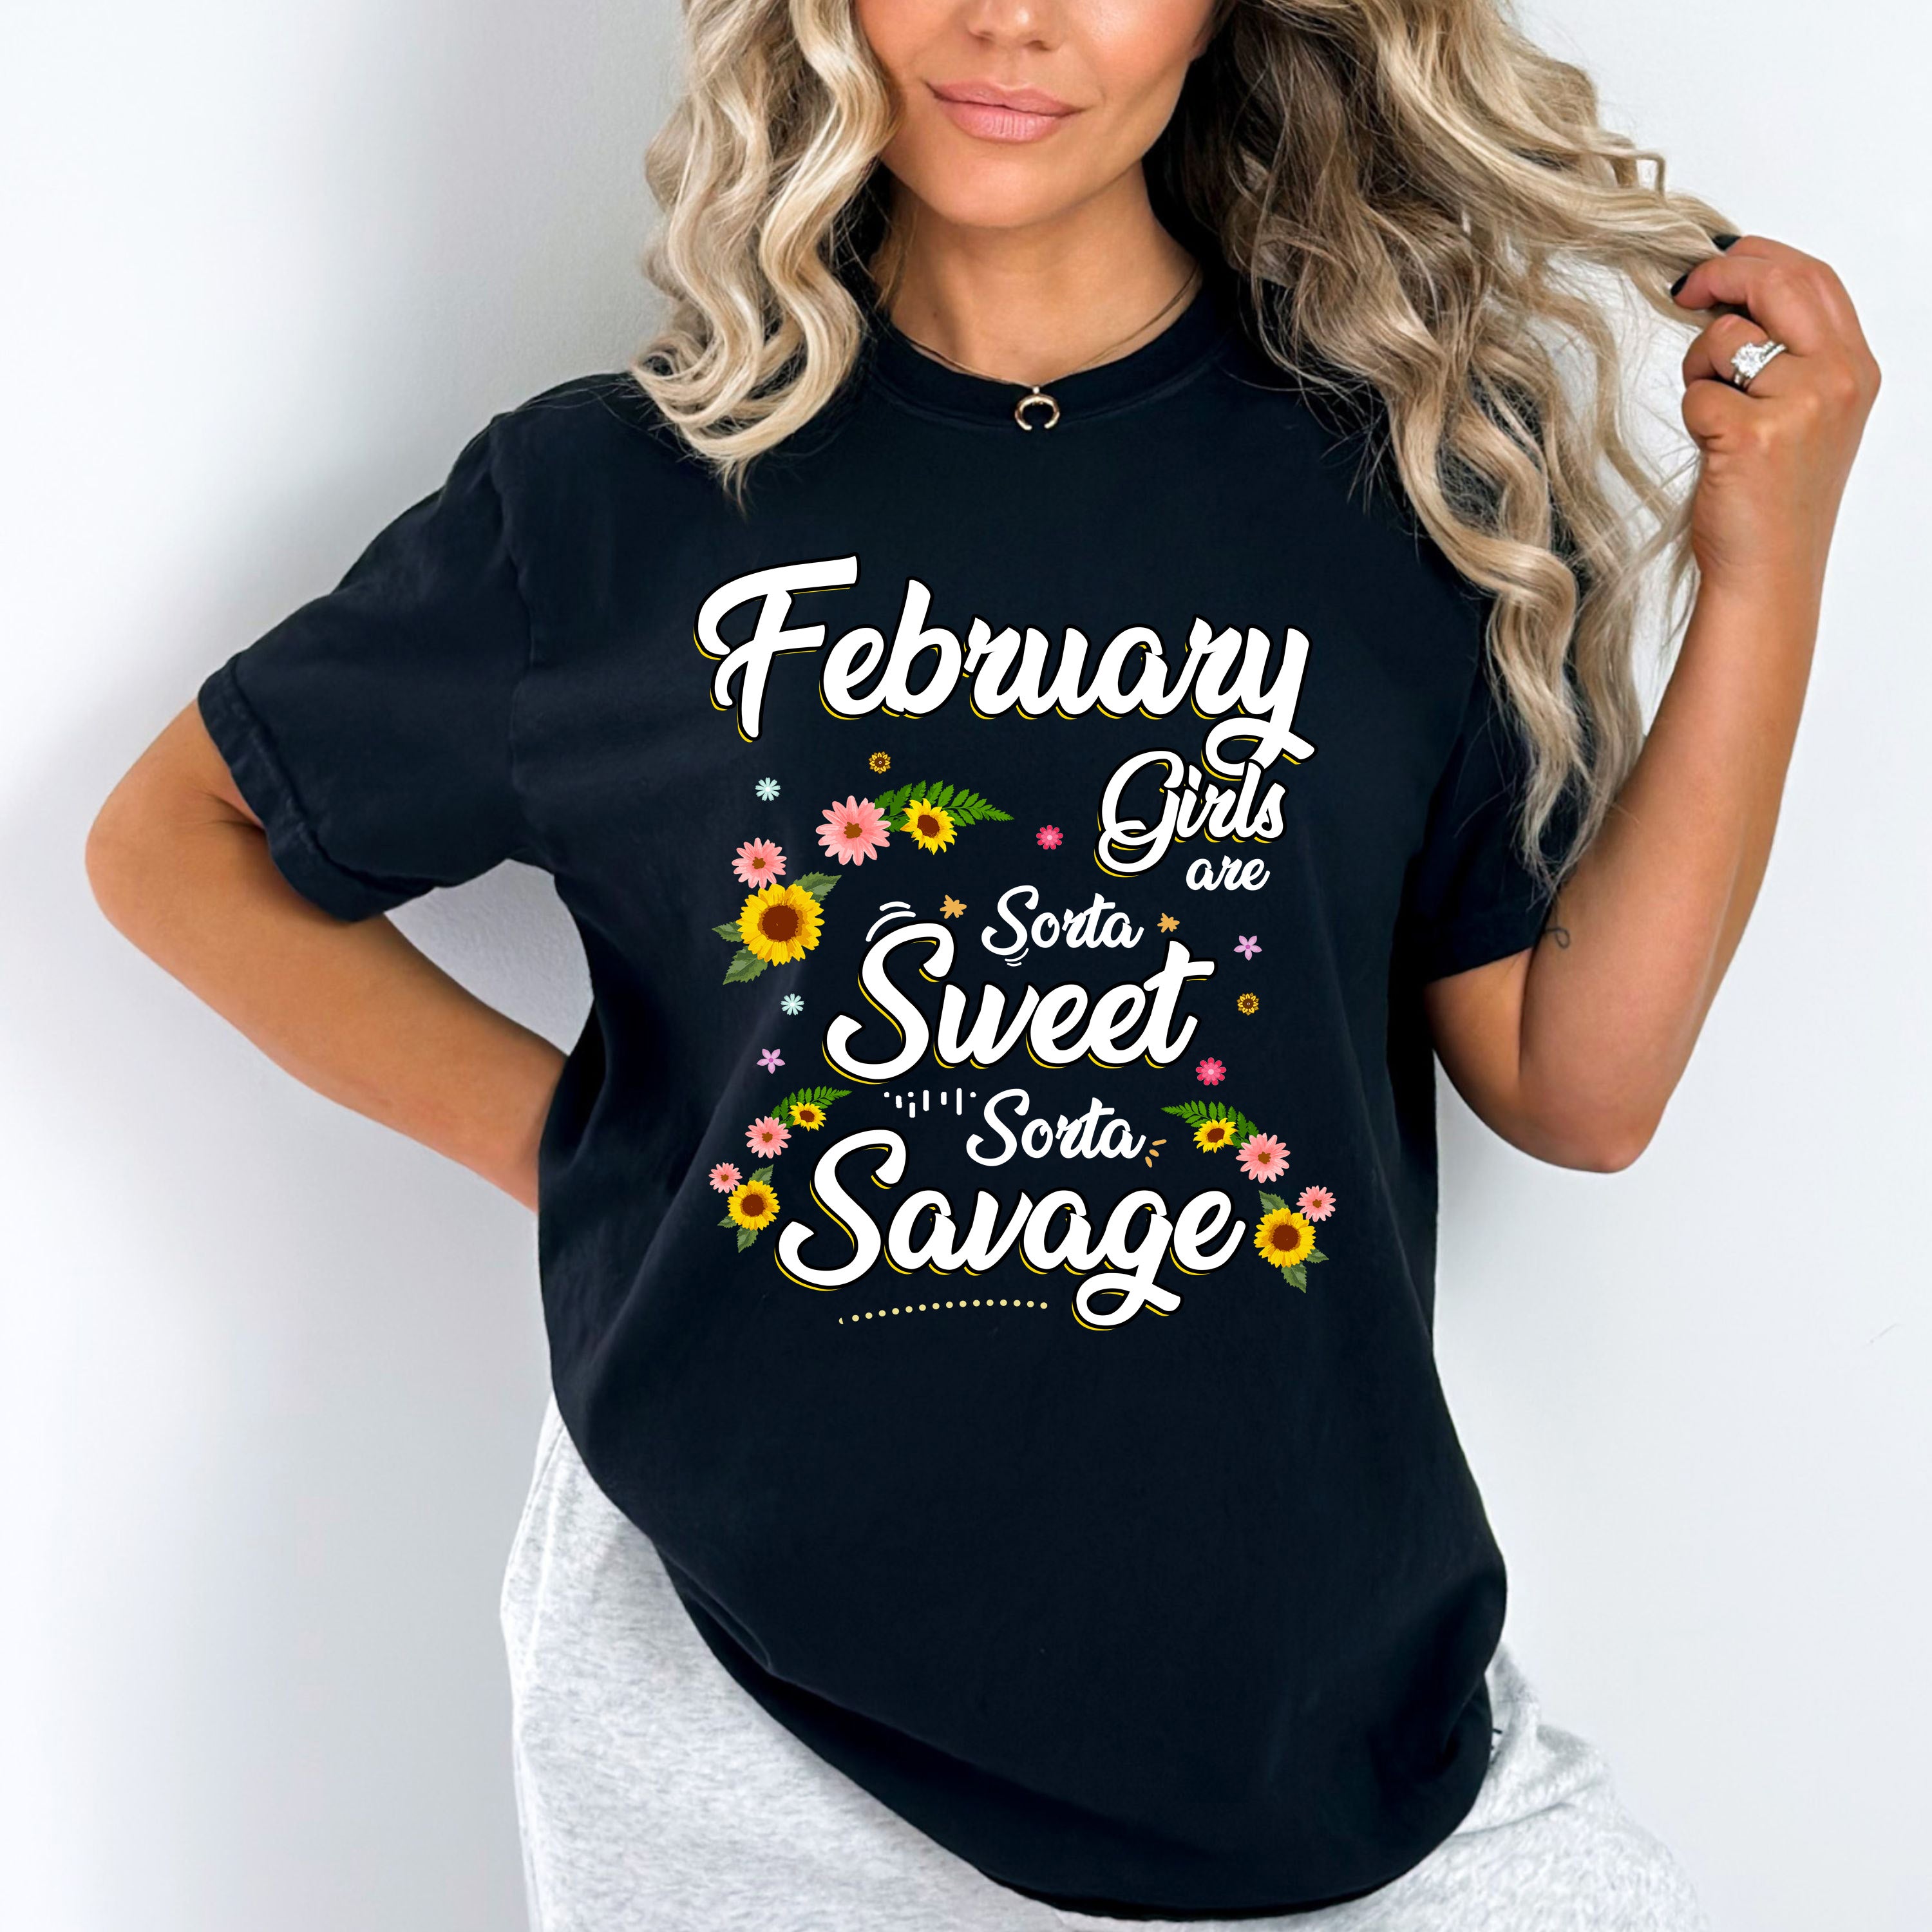 "February Girls Are Sorta Sweet Sorta Savage"